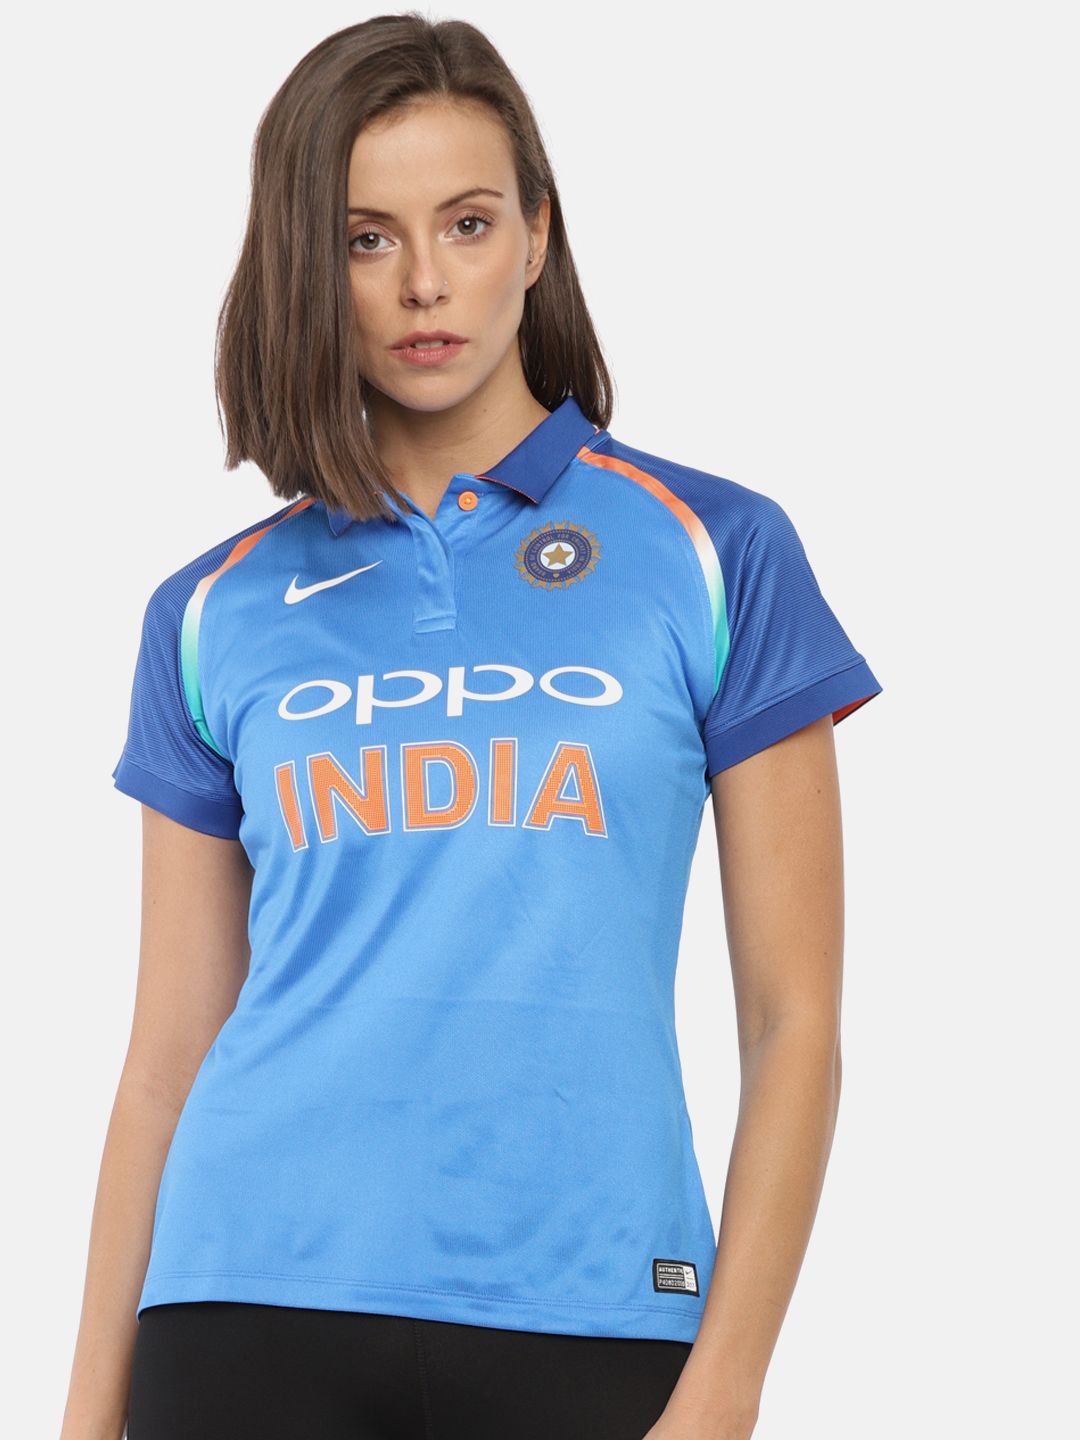 cricket shirts online india